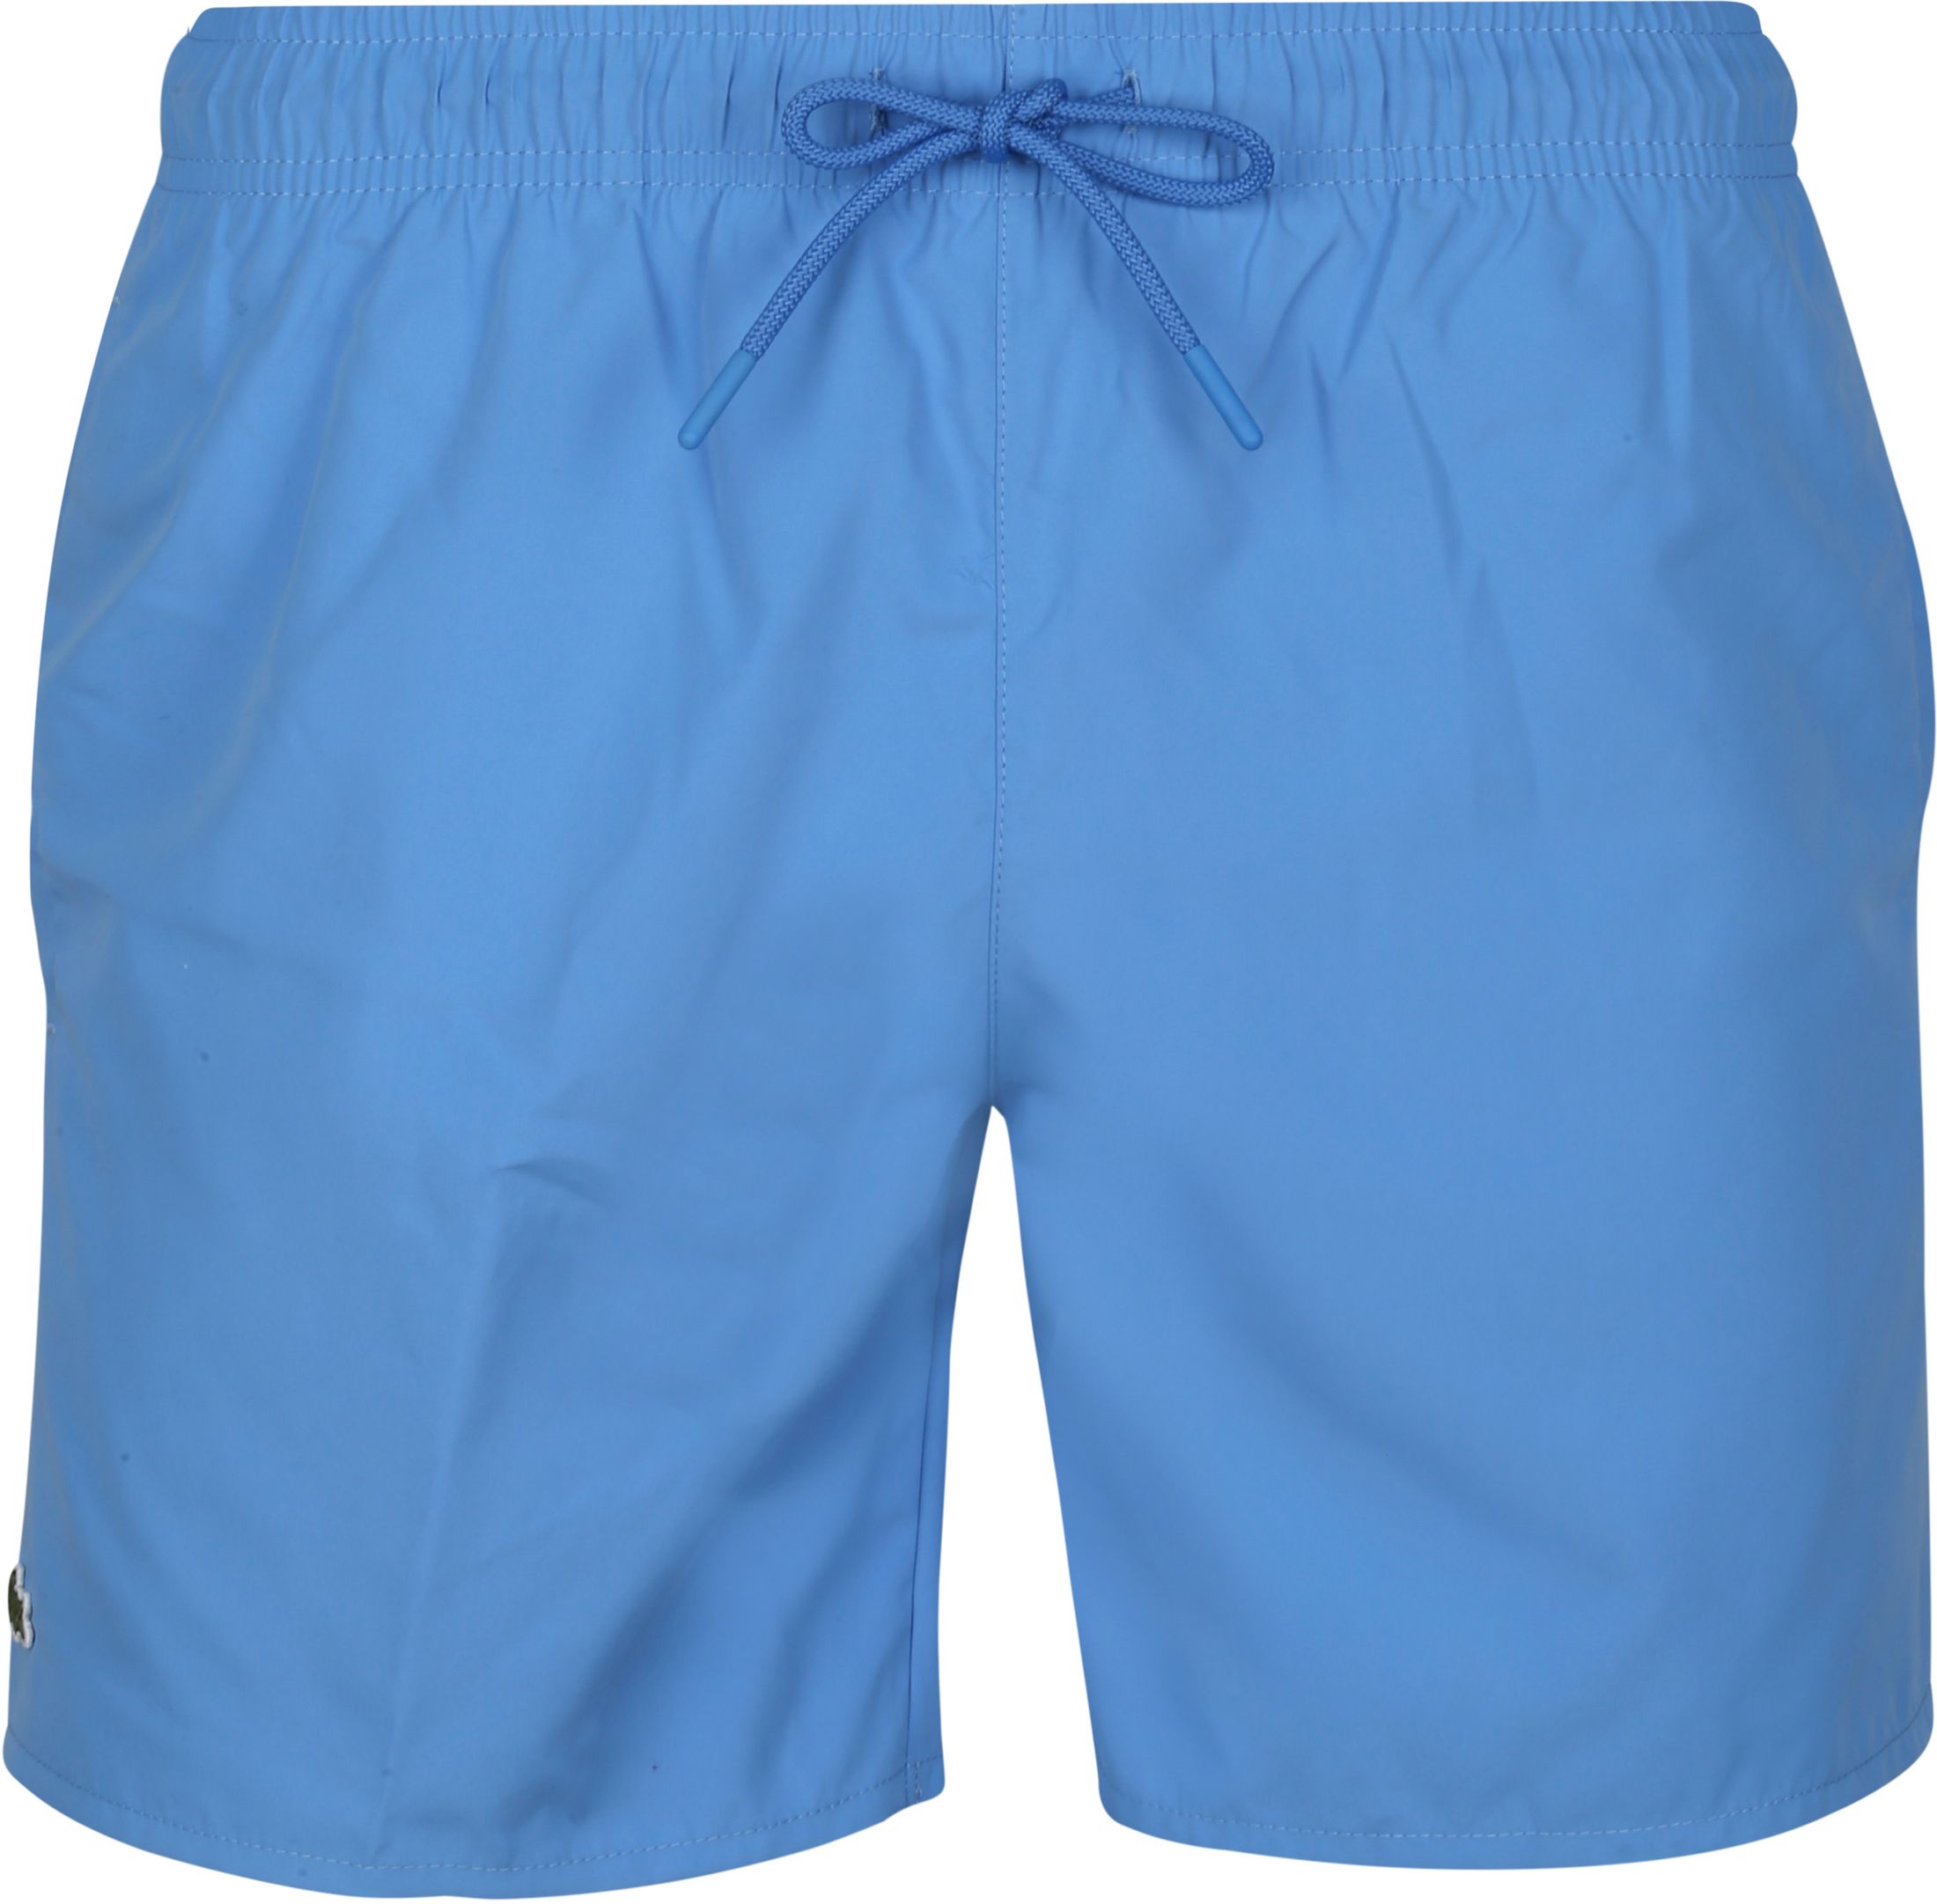 Lacoste Swimshorts Blue size XL